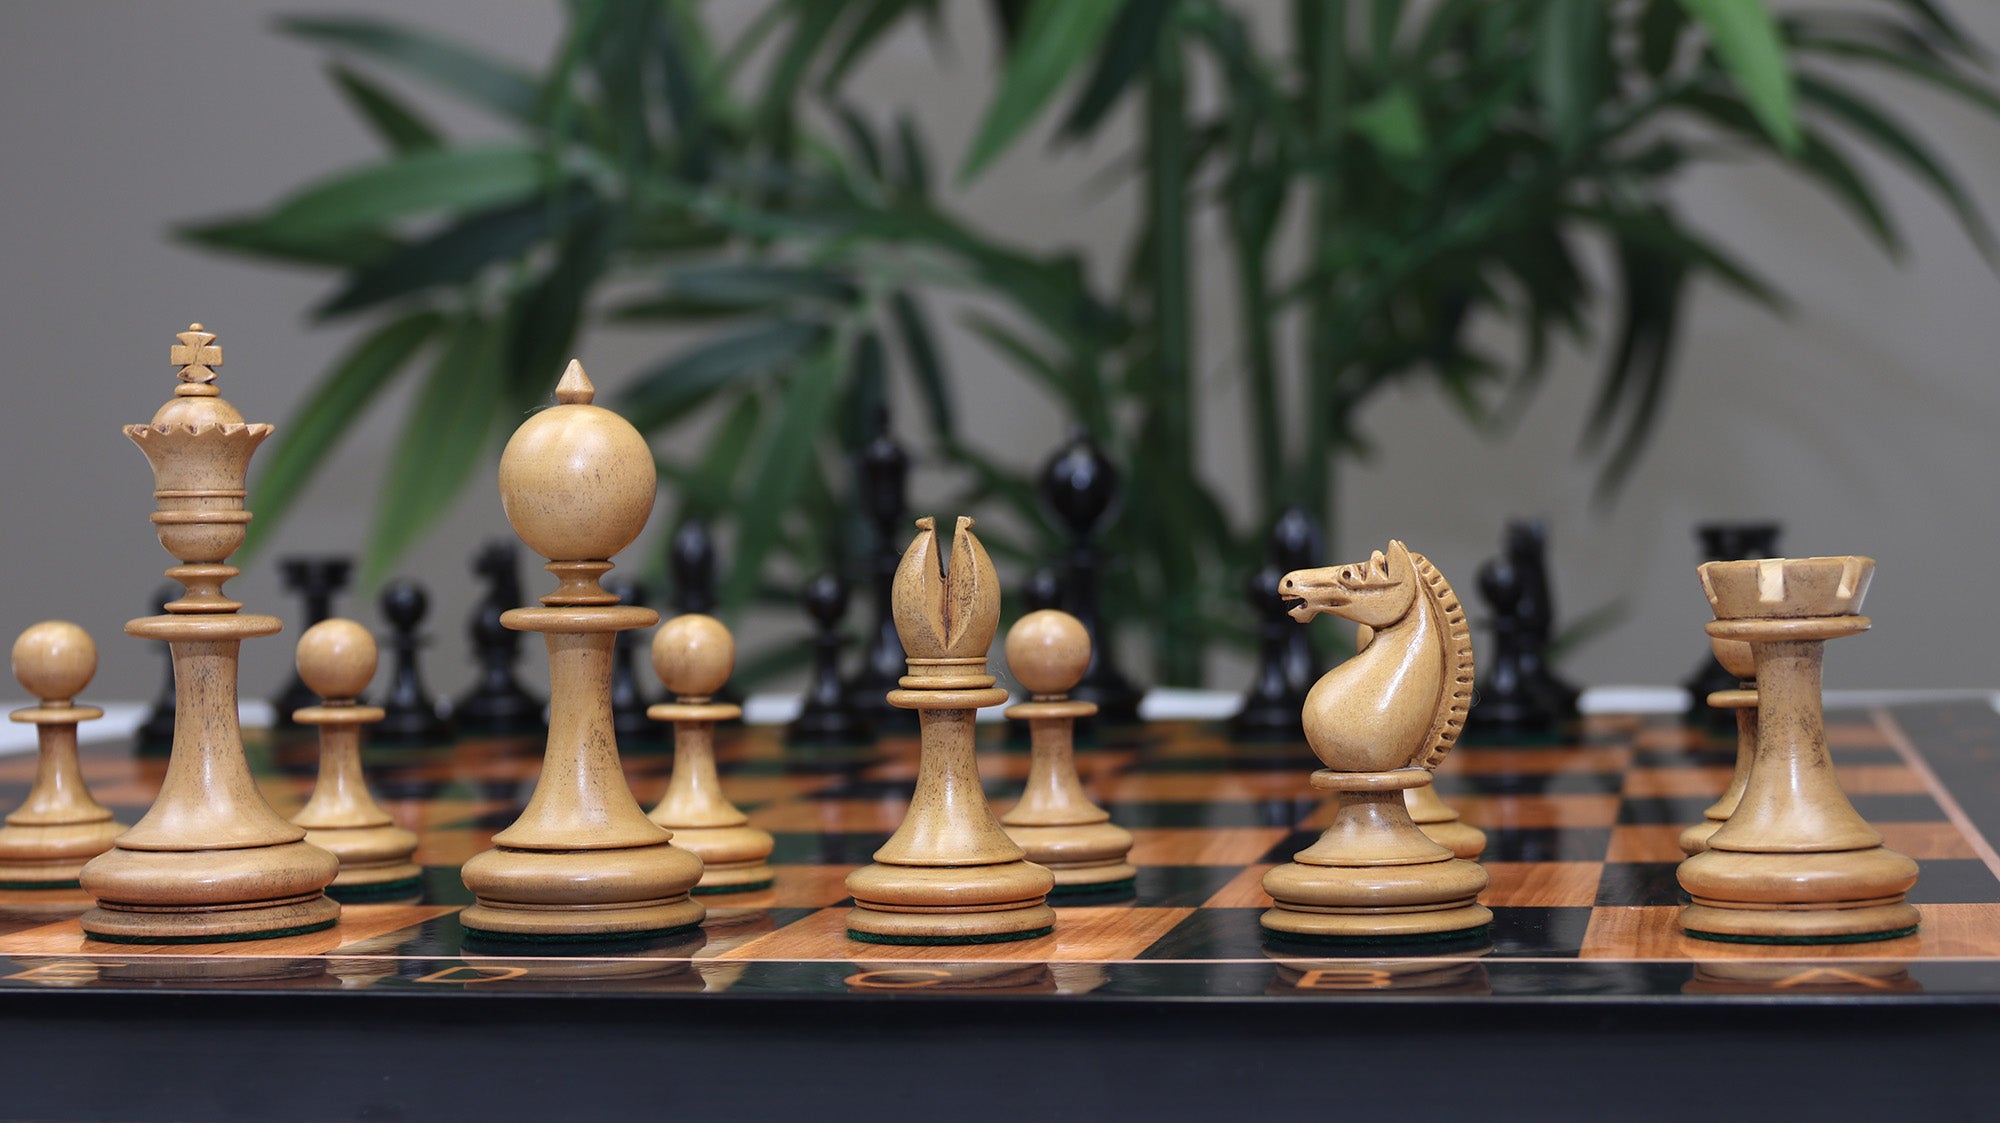 The William Hallett 1860 London Chess Set in Distressed Boxwood/Ebony - 3.5" King